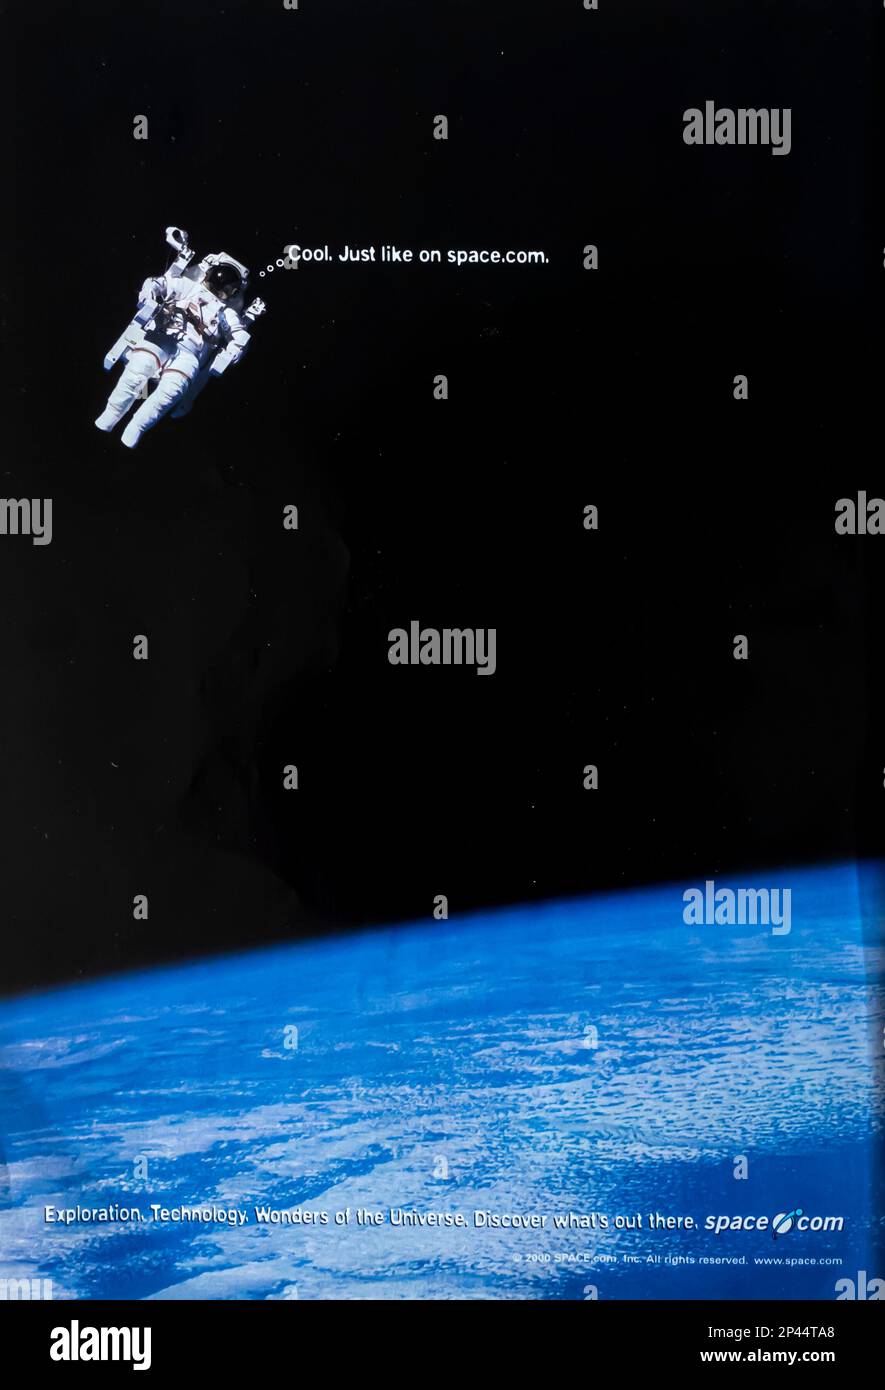 SPACE.com-Website-Werbung in einem NatGeo-Magazin Mai 2000 Stockfoto